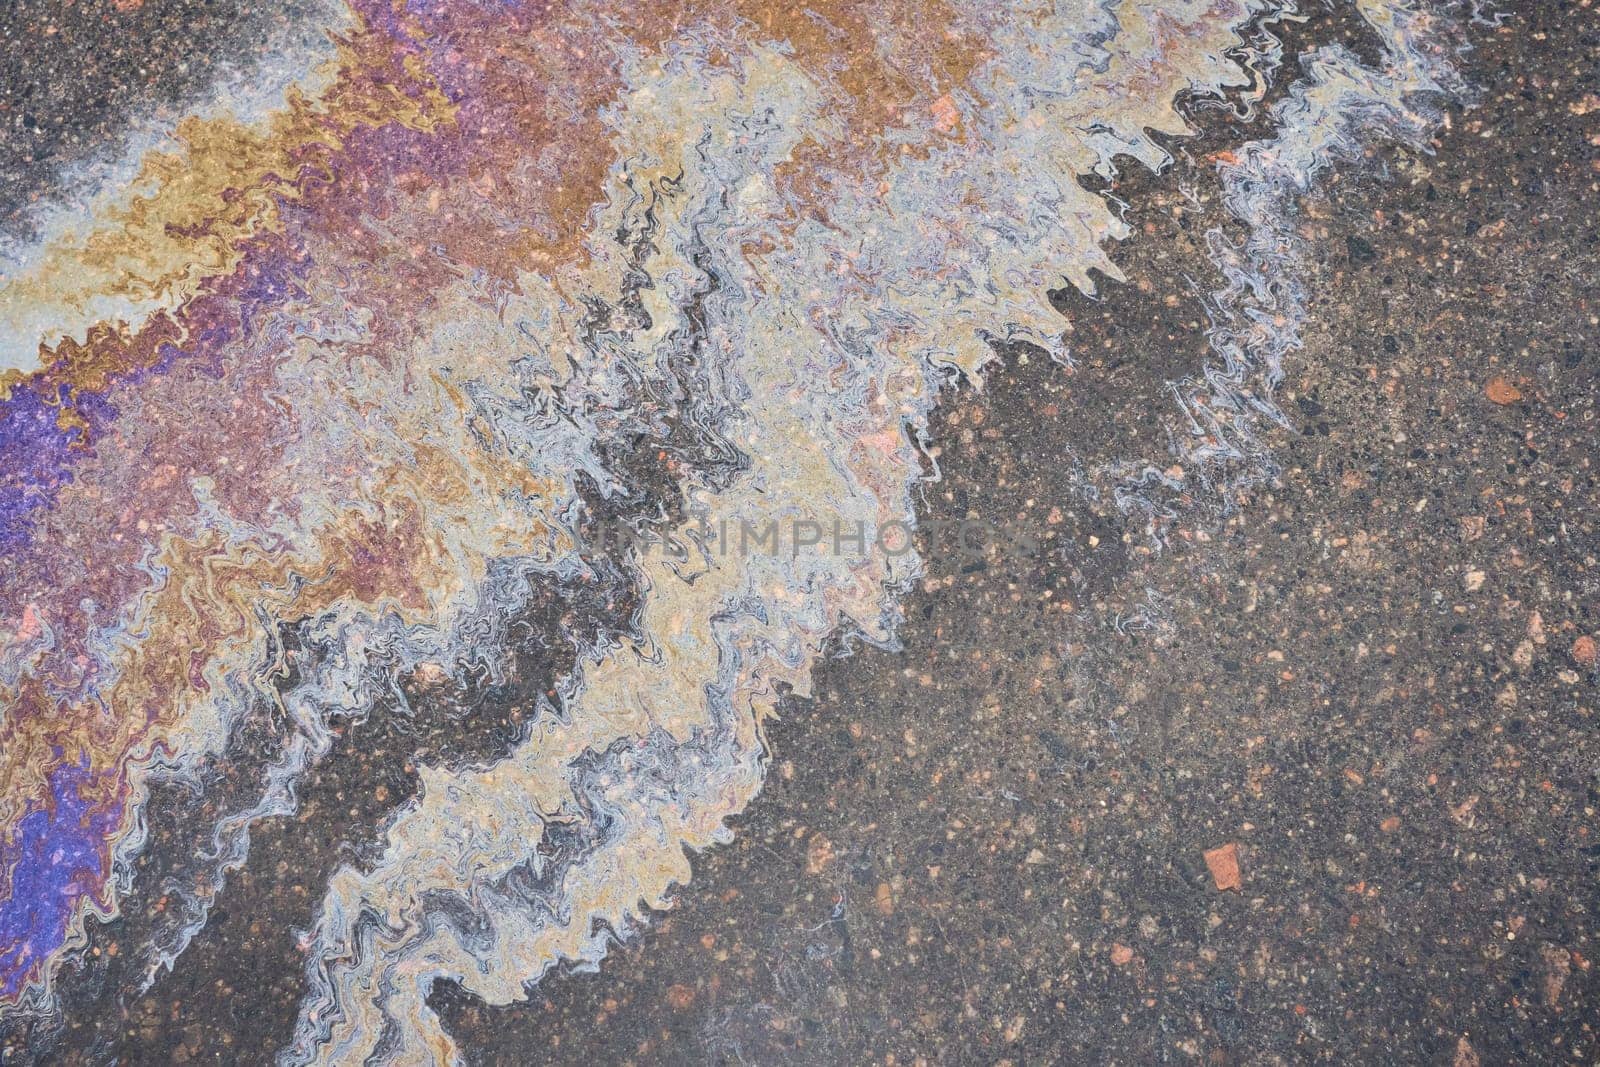 Oil Splotch on Asphalt, Colorful Gasoline Fuel Patterns on Road as Texture or Background